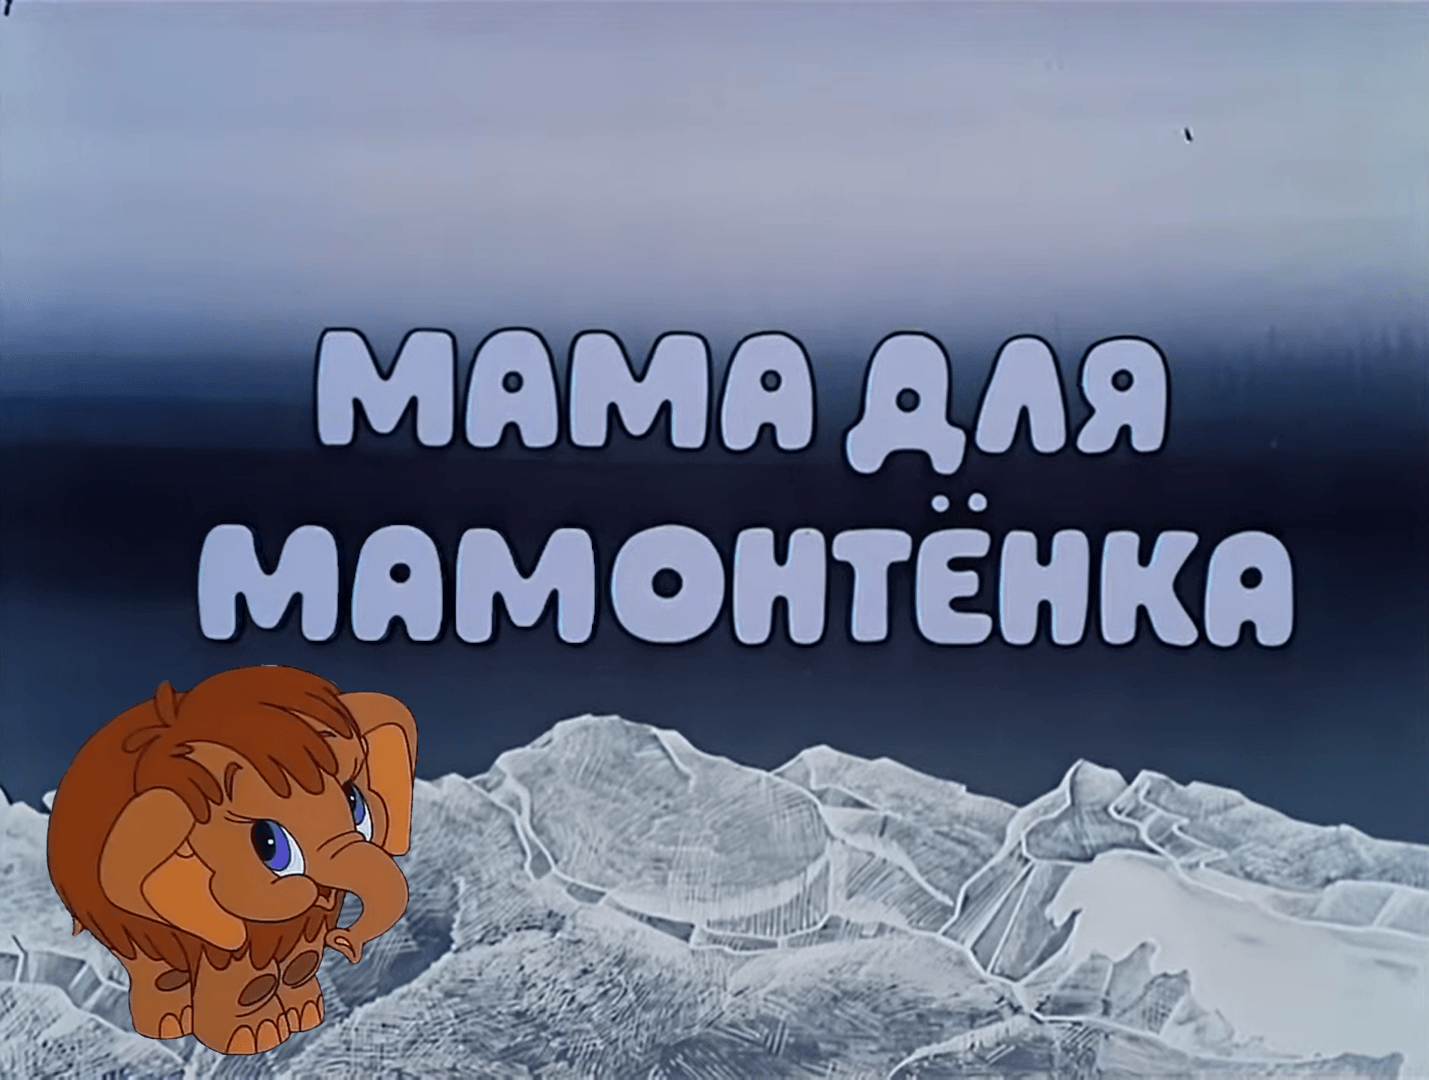 Mama for Baby Mammoth